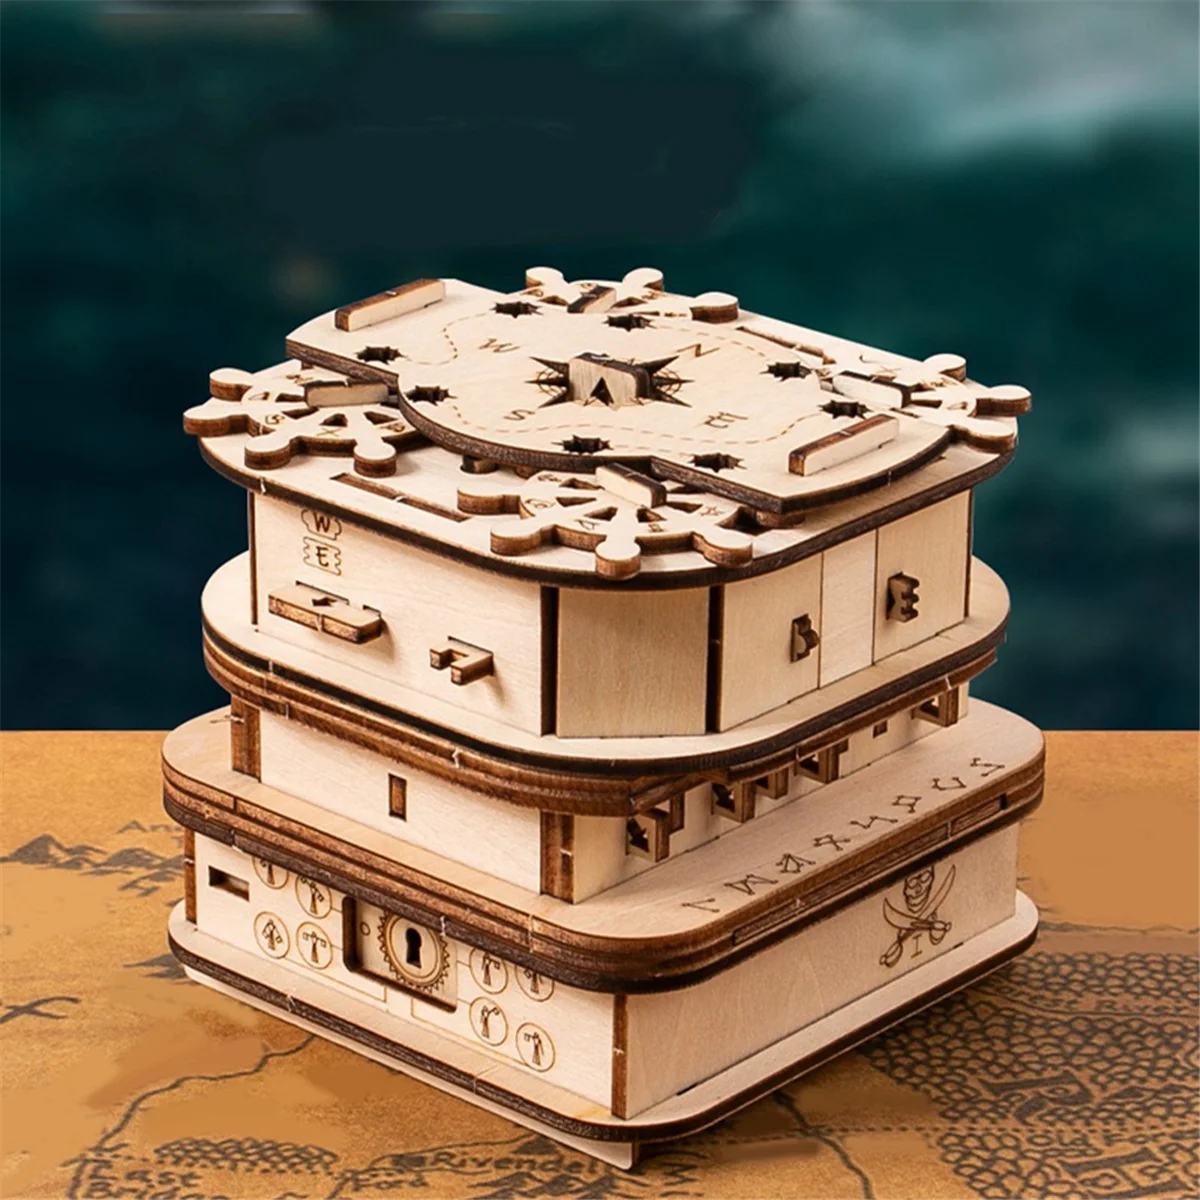 Davy Jones'Locker, коробка-головоломка, Подарочная коробка, деревянная головоломка, деревянная головоломка для взрослых, головоломка для мозга, подарок на день рождения для мужчин